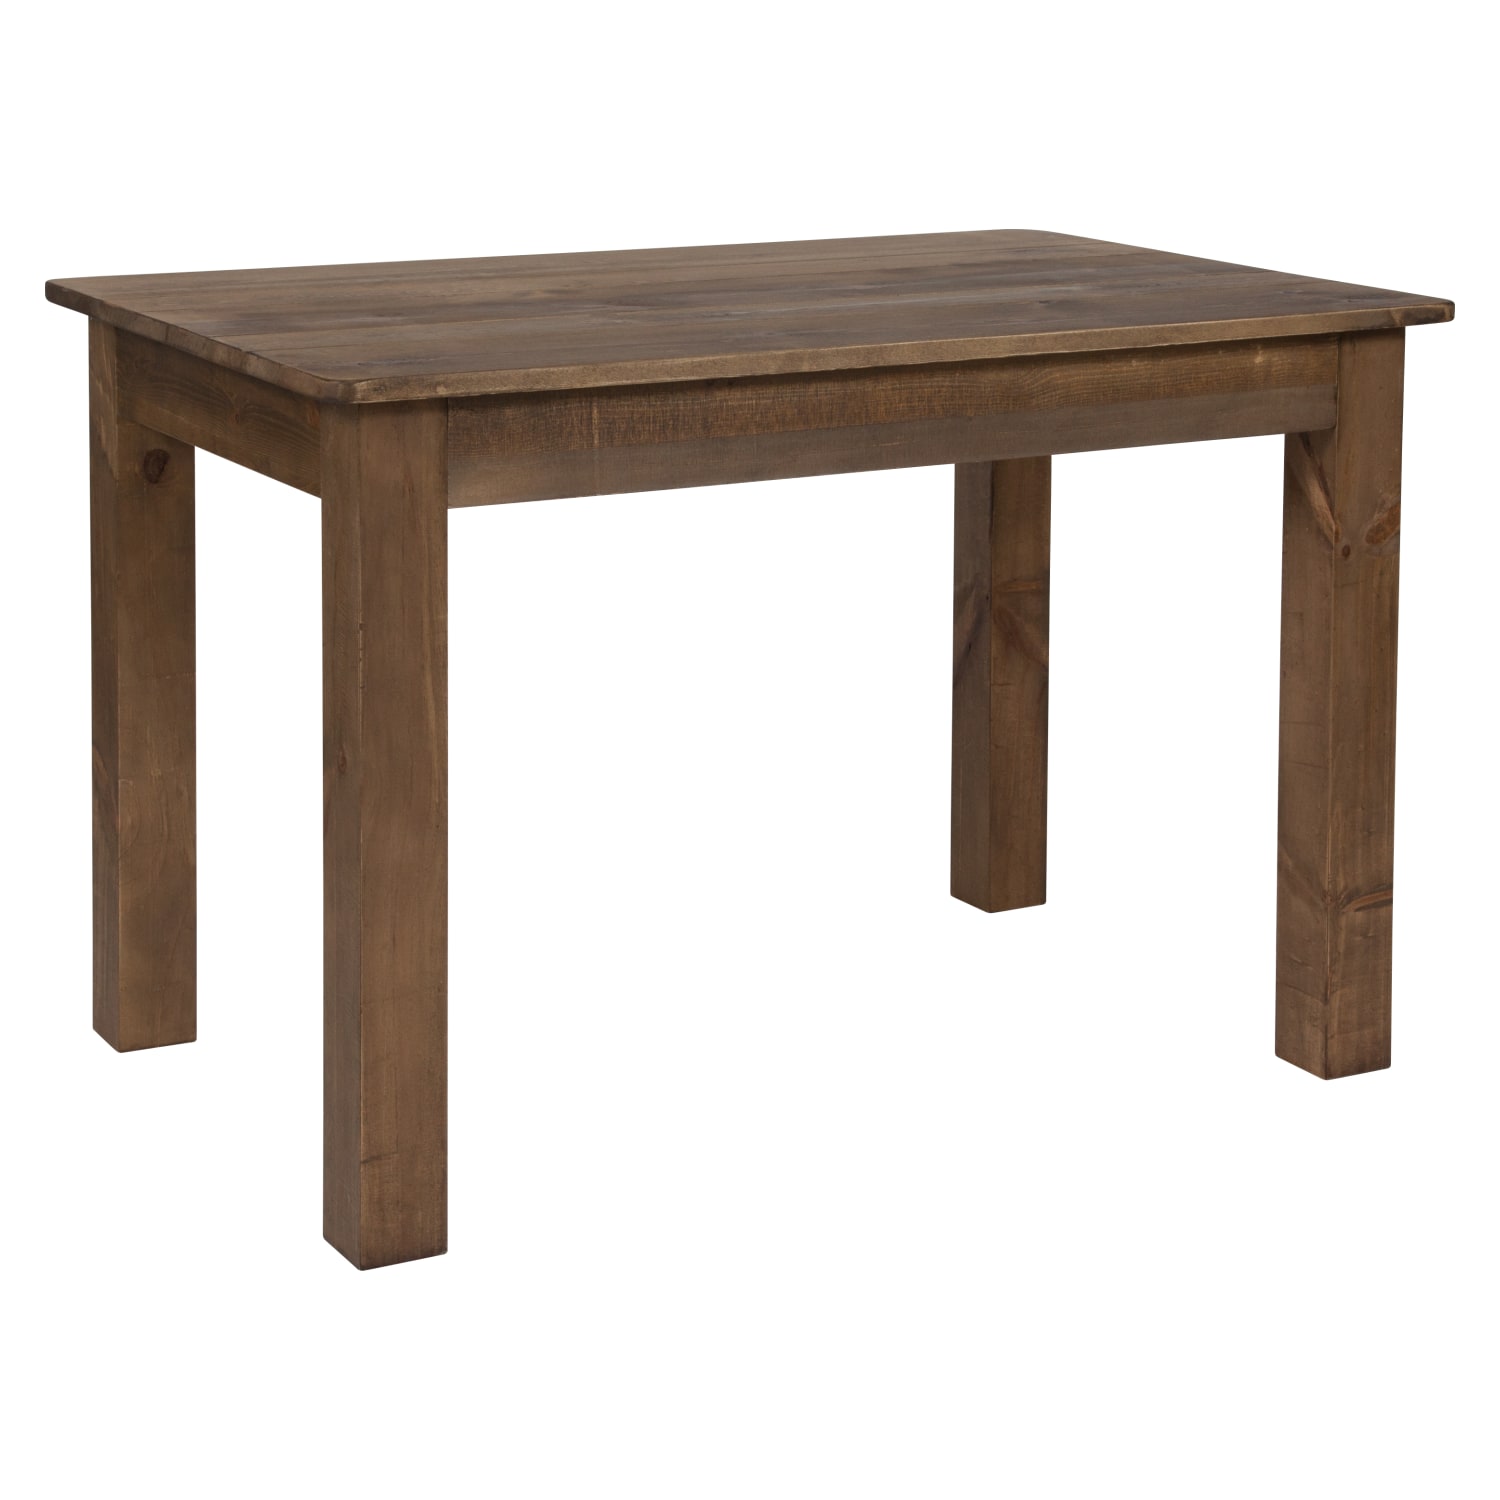 46” x 30” Rectangular Antique Rustic Solid Pine Farm Dining Table